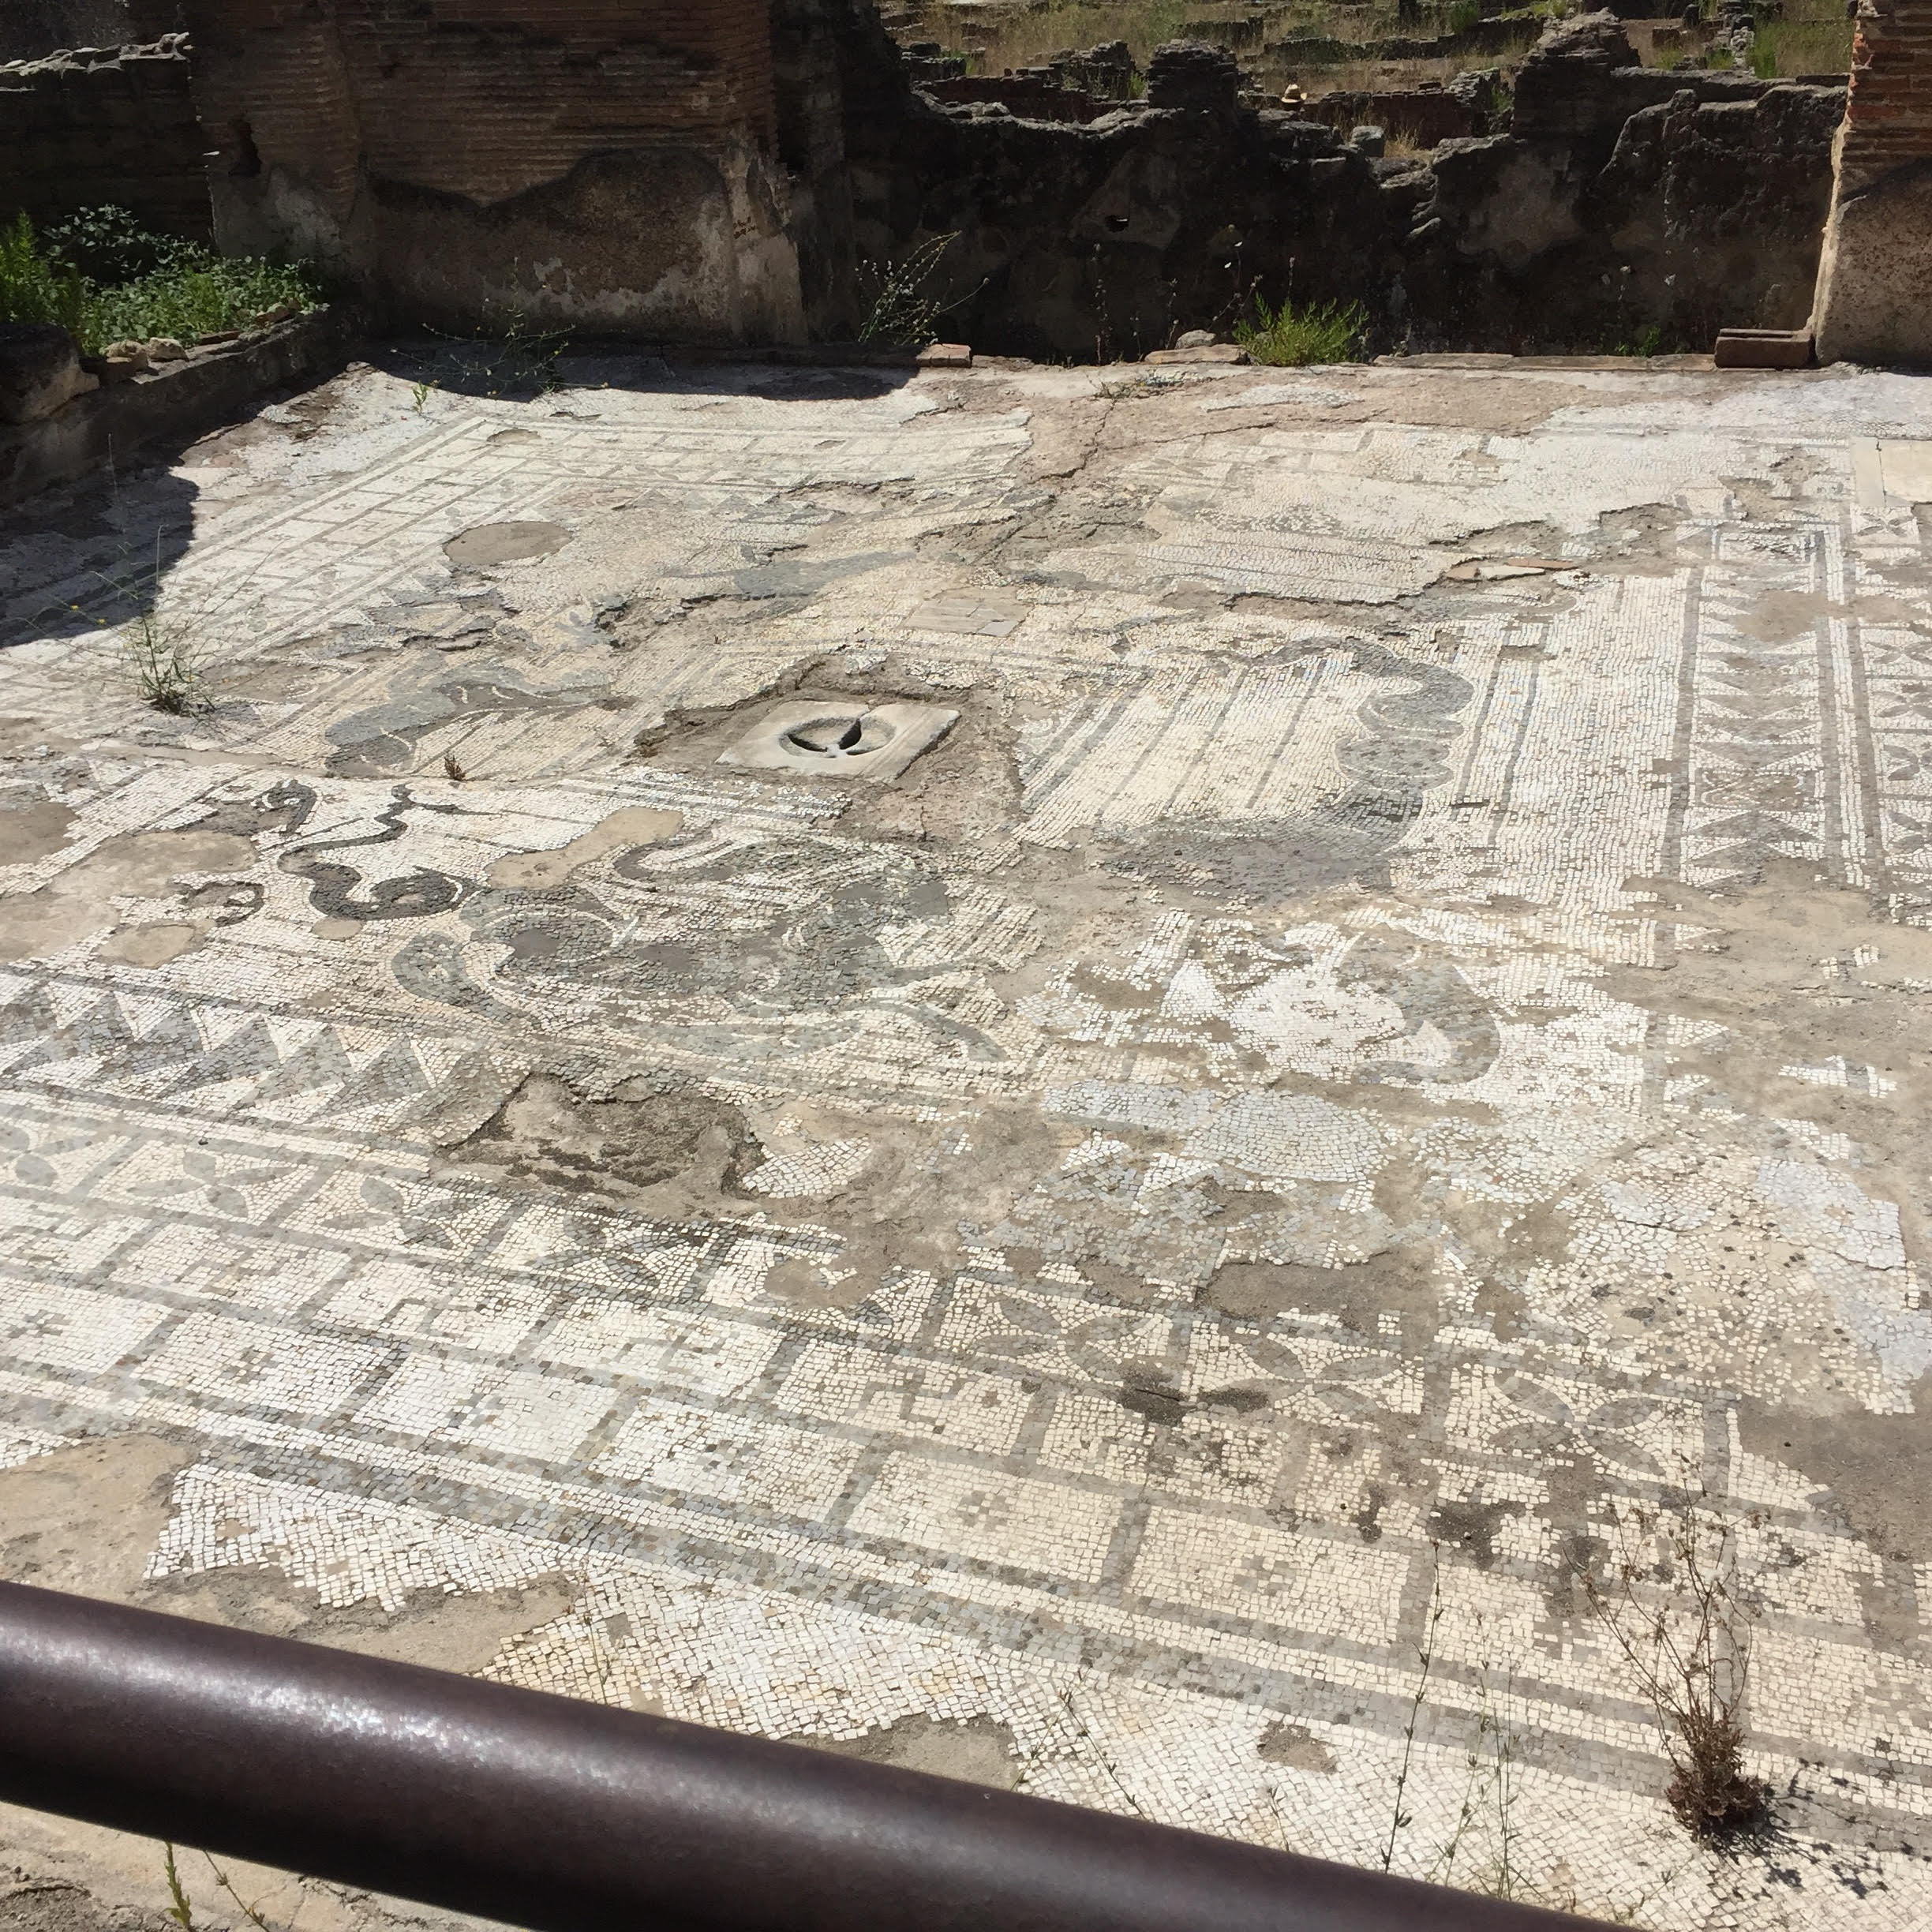 velia-area-archeologica-mosaico-2